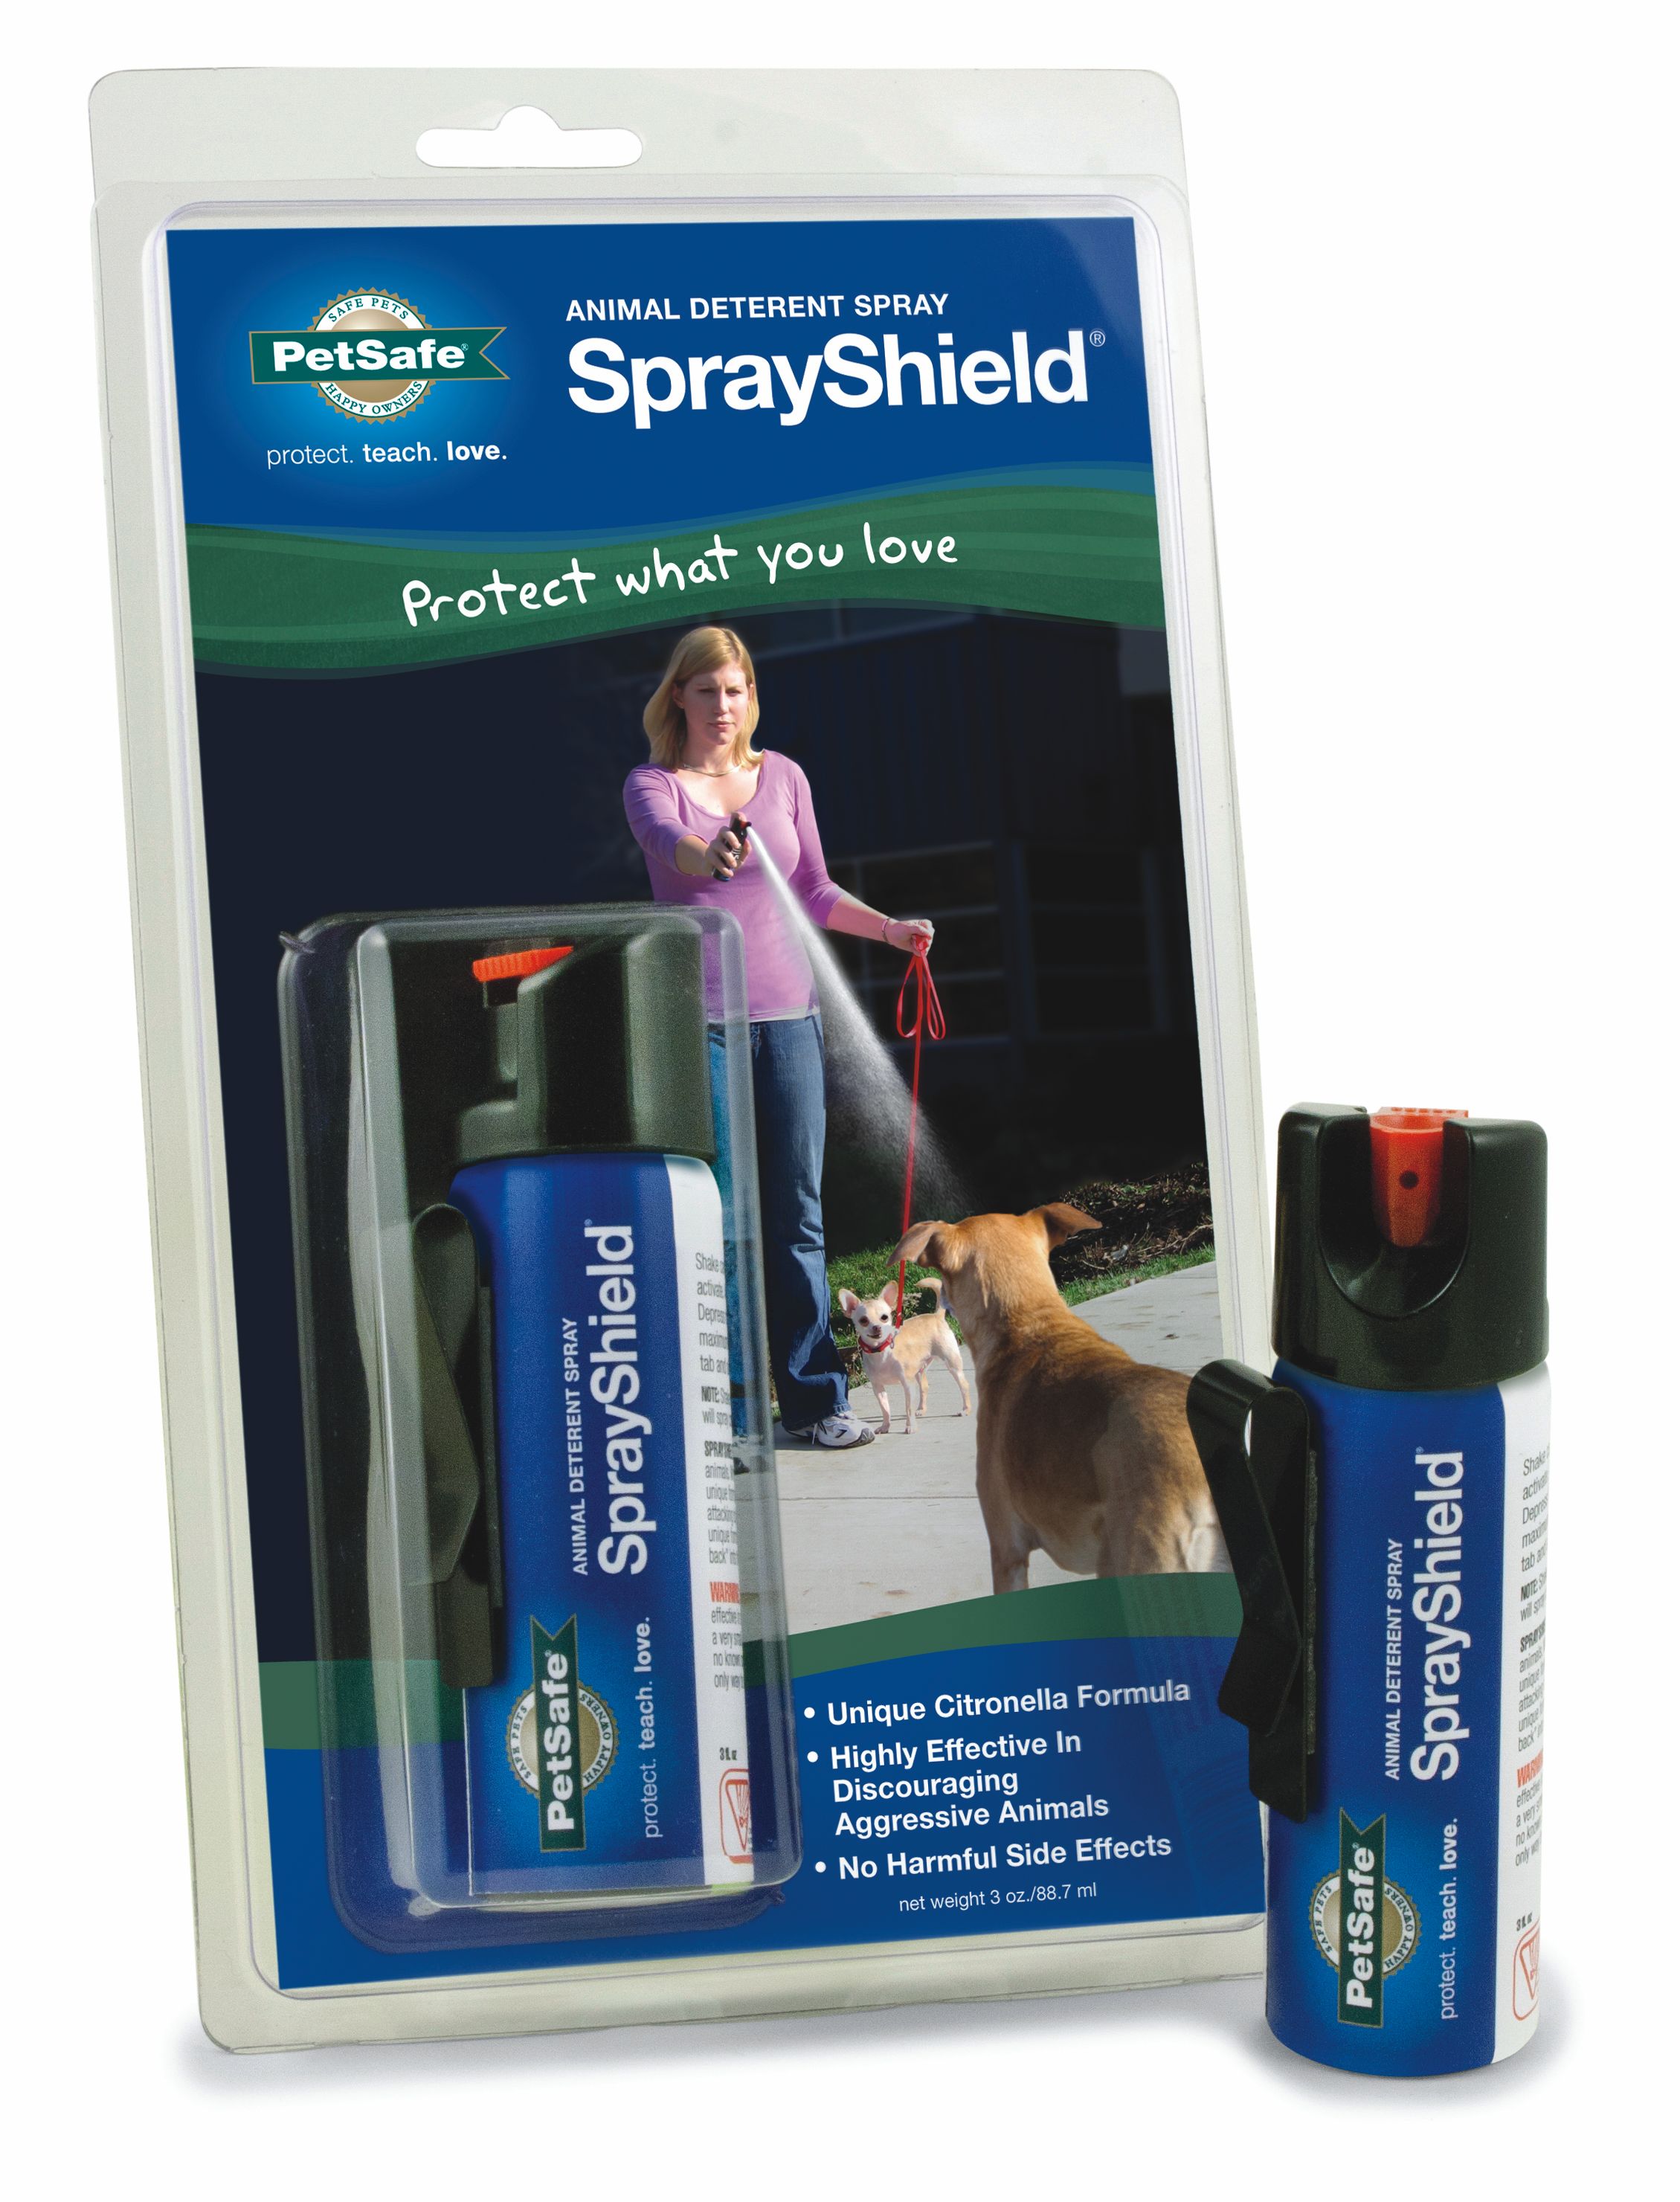 SprayShield Animal Deterrent